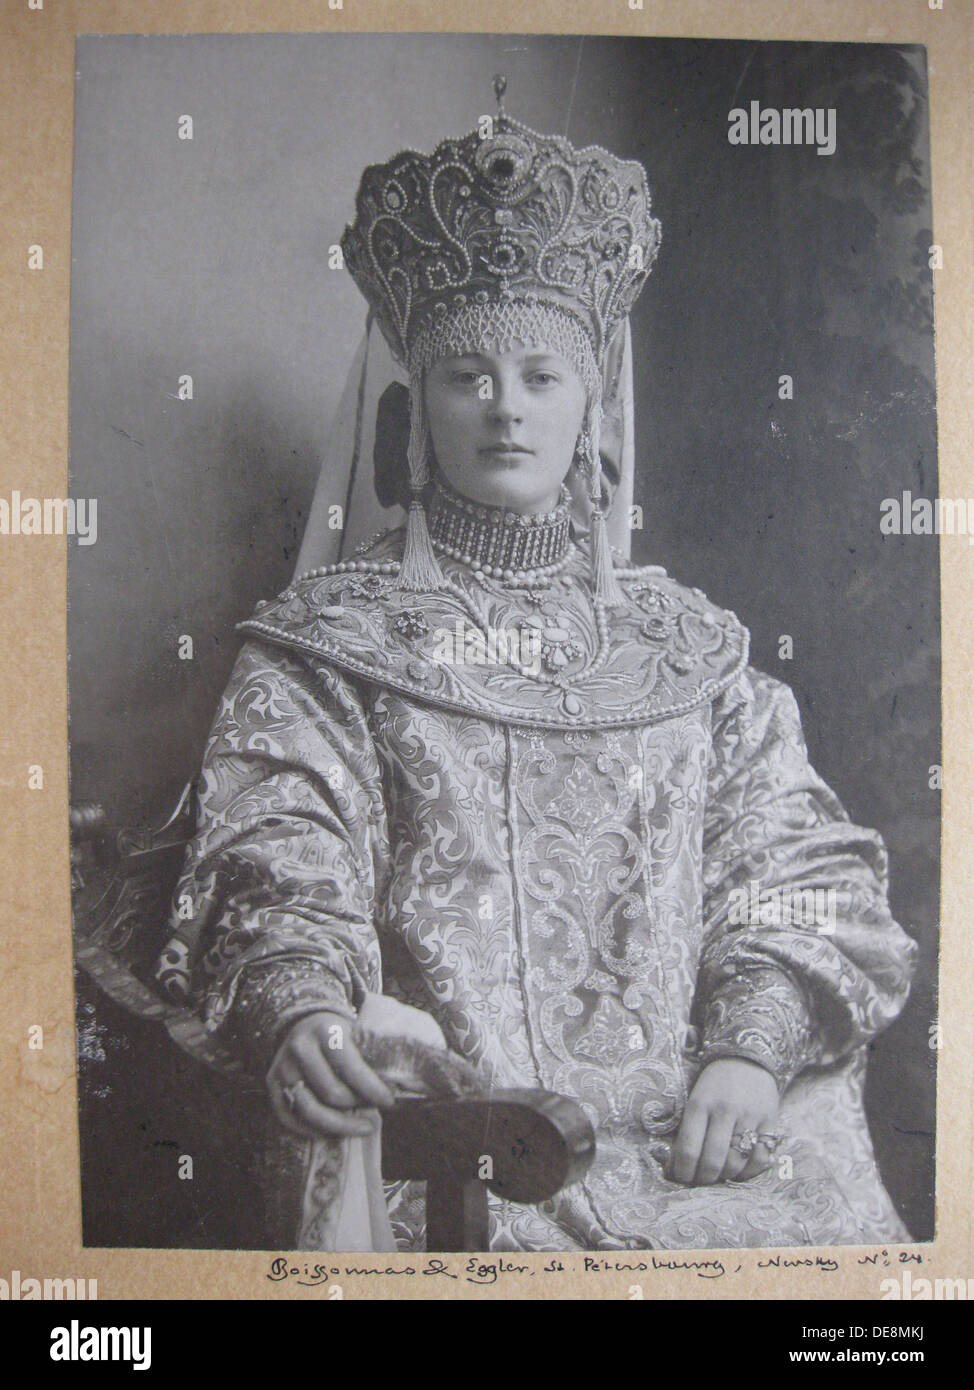 Princess Yelizaveta Dimitrievna zu Sayn-Wittgenstein, nee Nabokova (1877-1942), 1913. Stock Photo